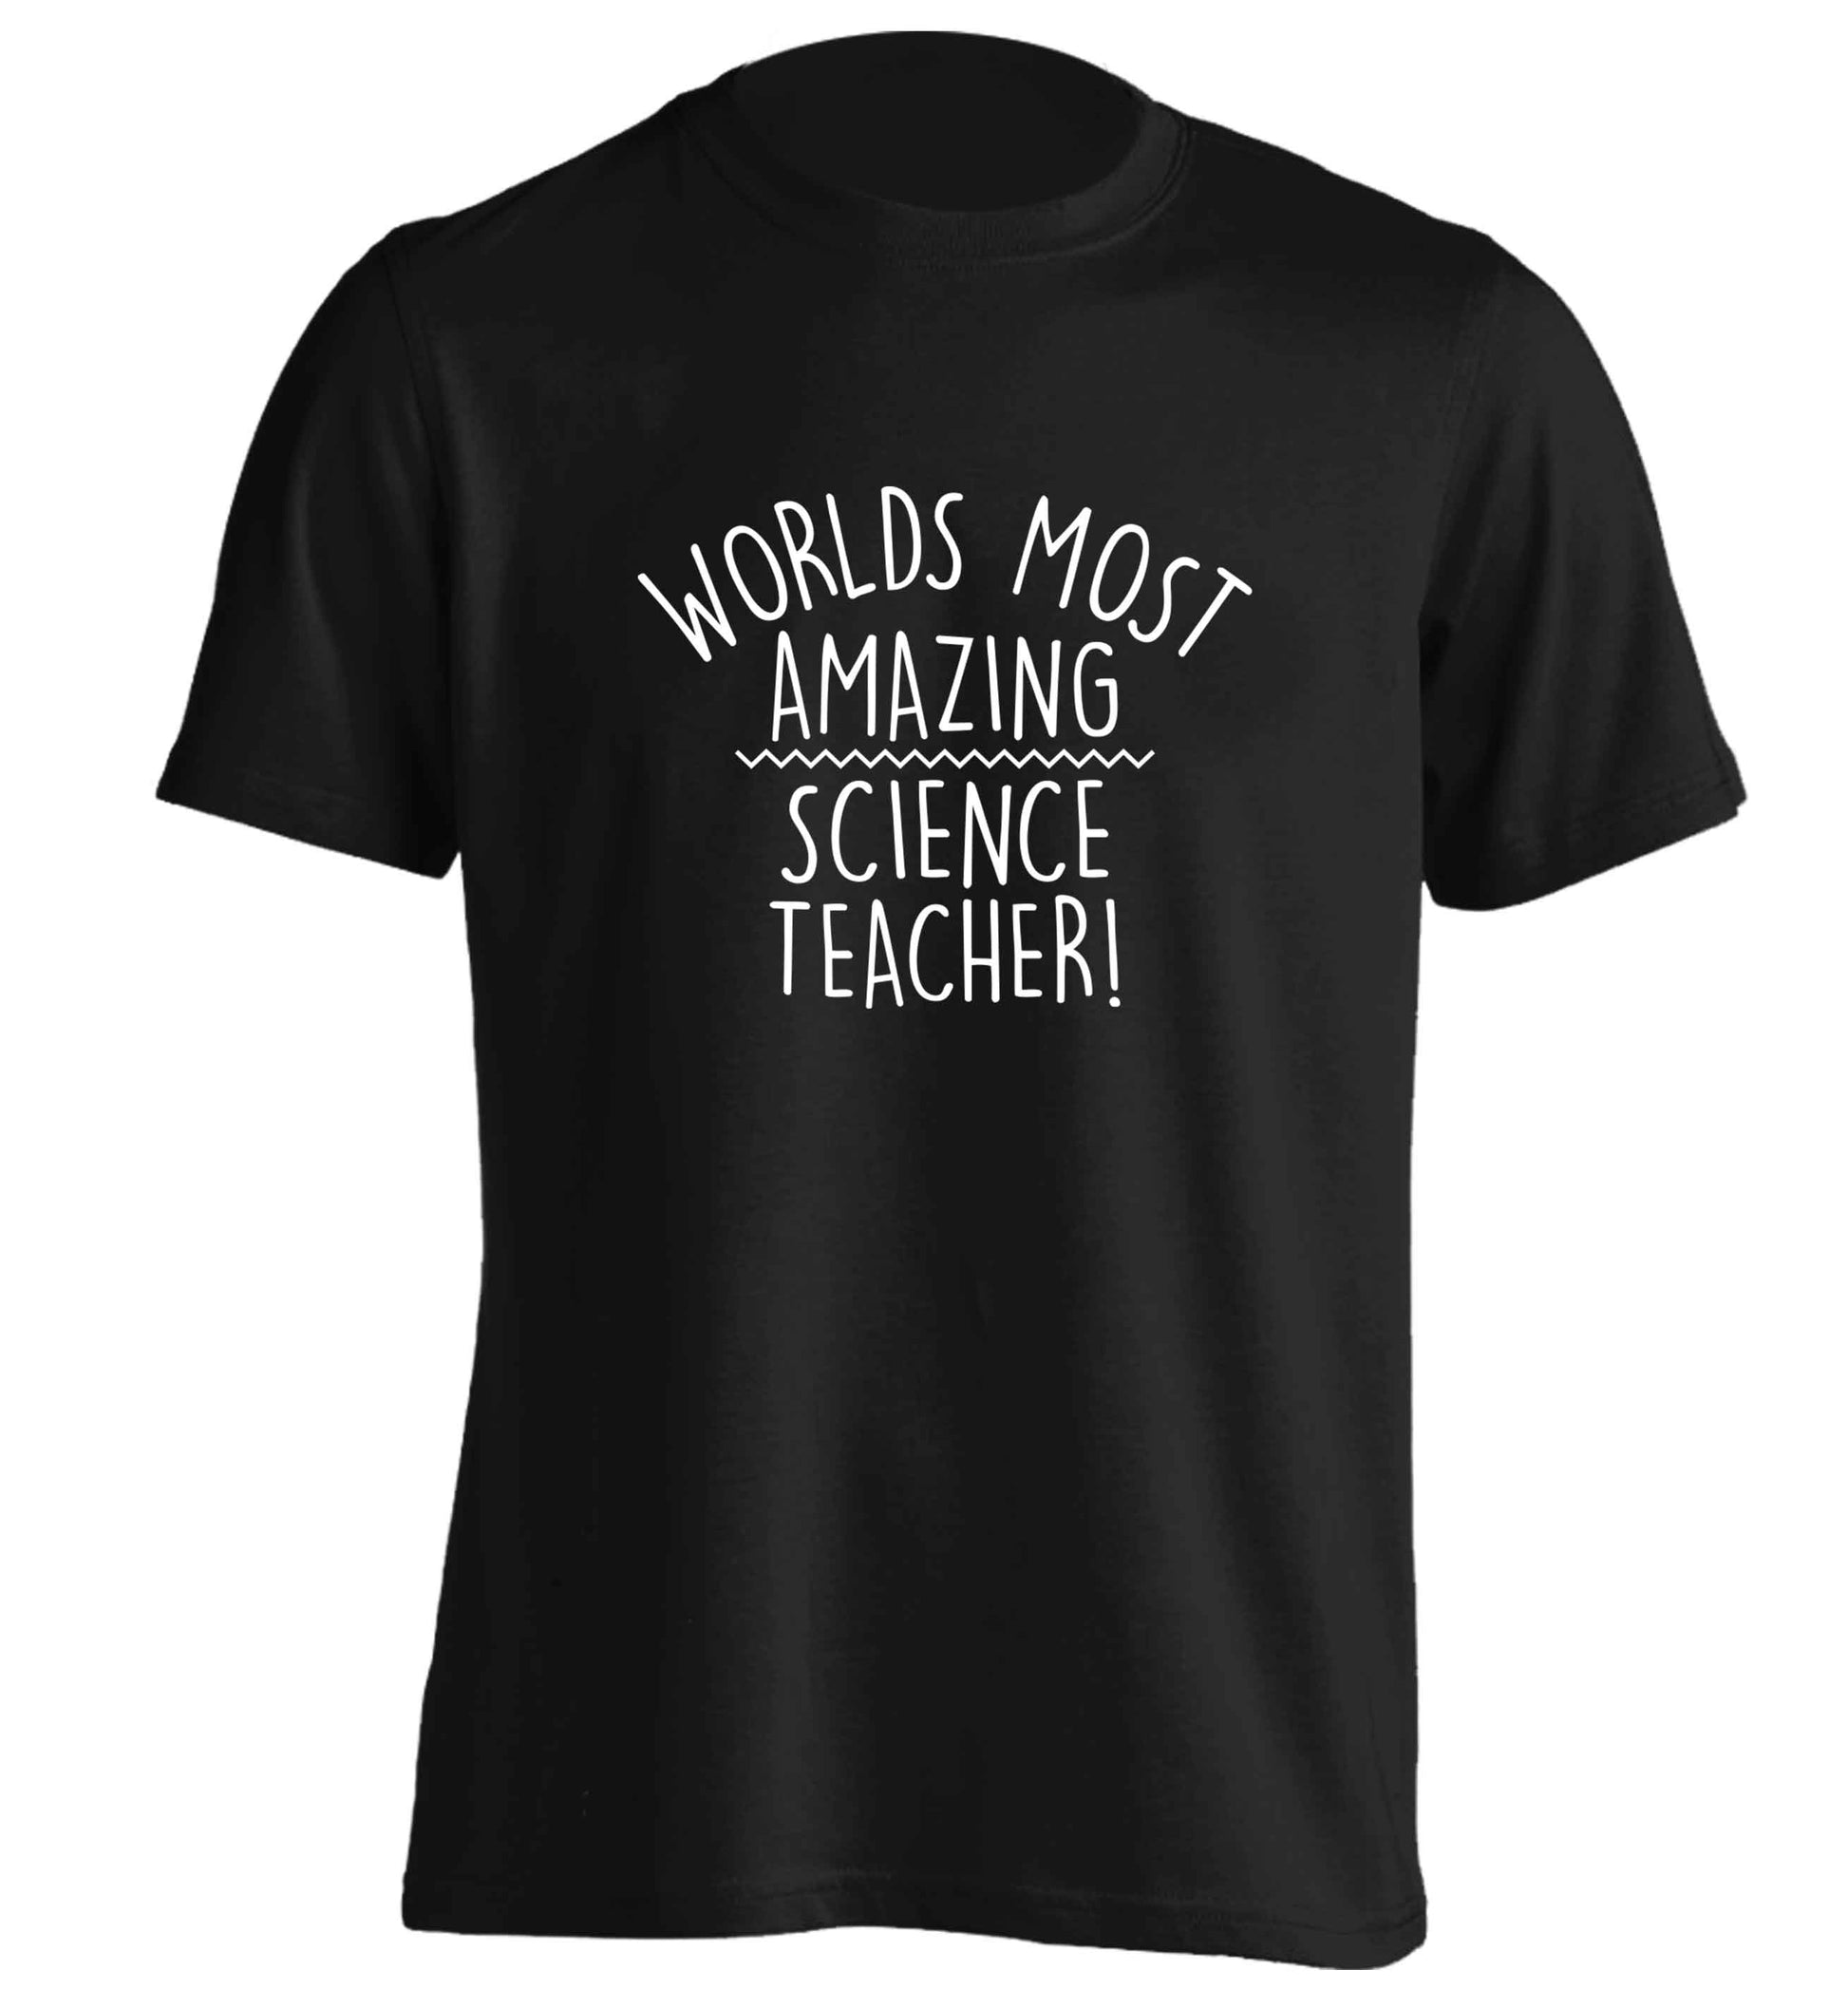 Worlds most amazing science teacher adults unisex black Tshirt 2XL